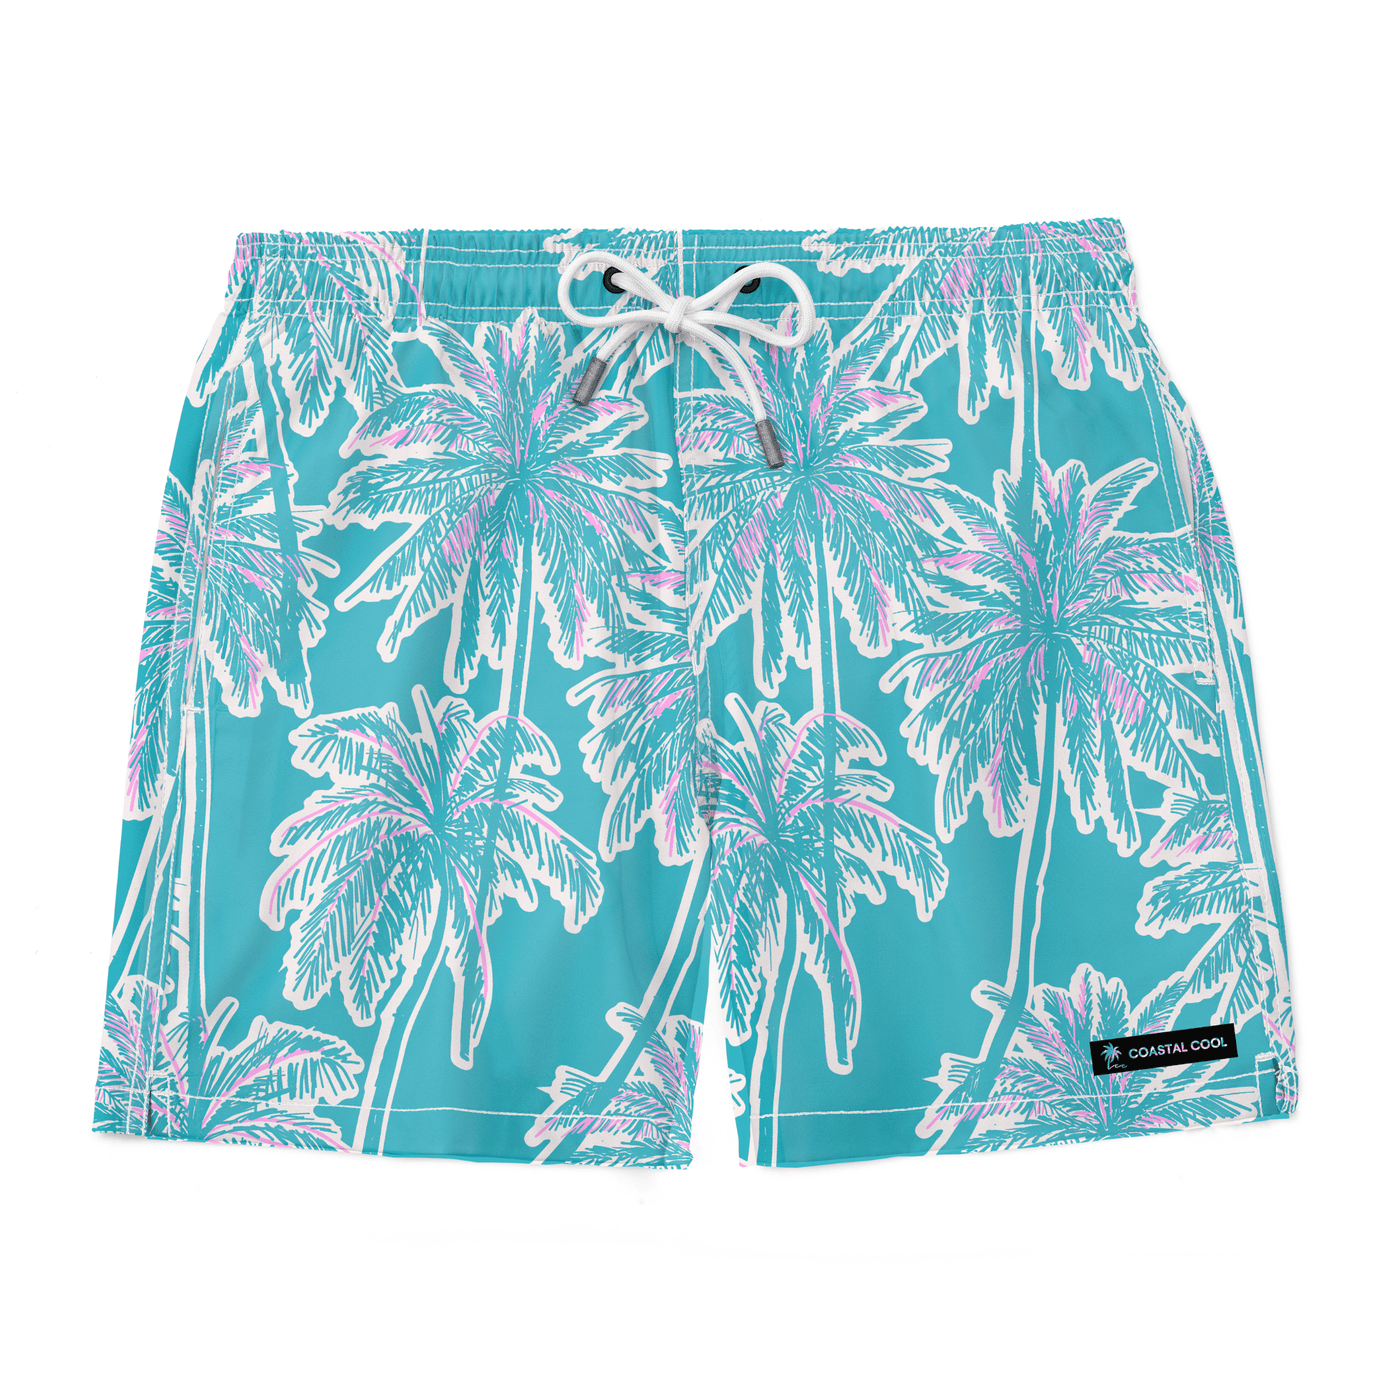 Virgin Islands Blue Swim Trunks - Coastal Cool - Swimwear and Beachwear - Recycled fabrics